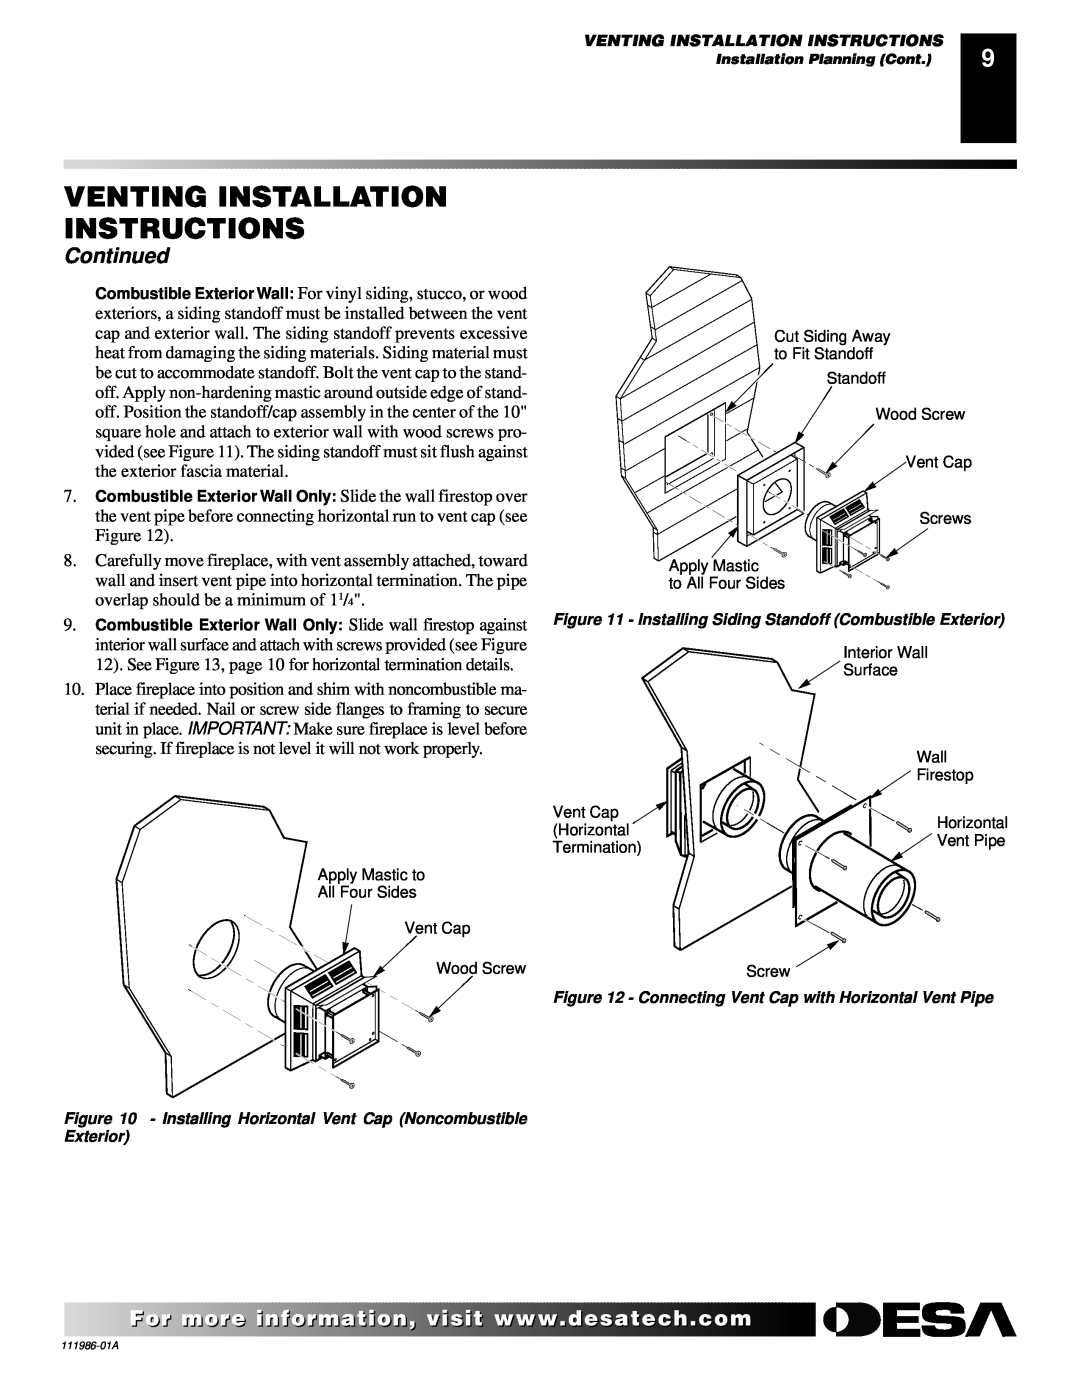 Desa T32N, T32P Venting Installation Instructions, Continued, Installing Horizontal Vent Cap Noncombustible Exterior 